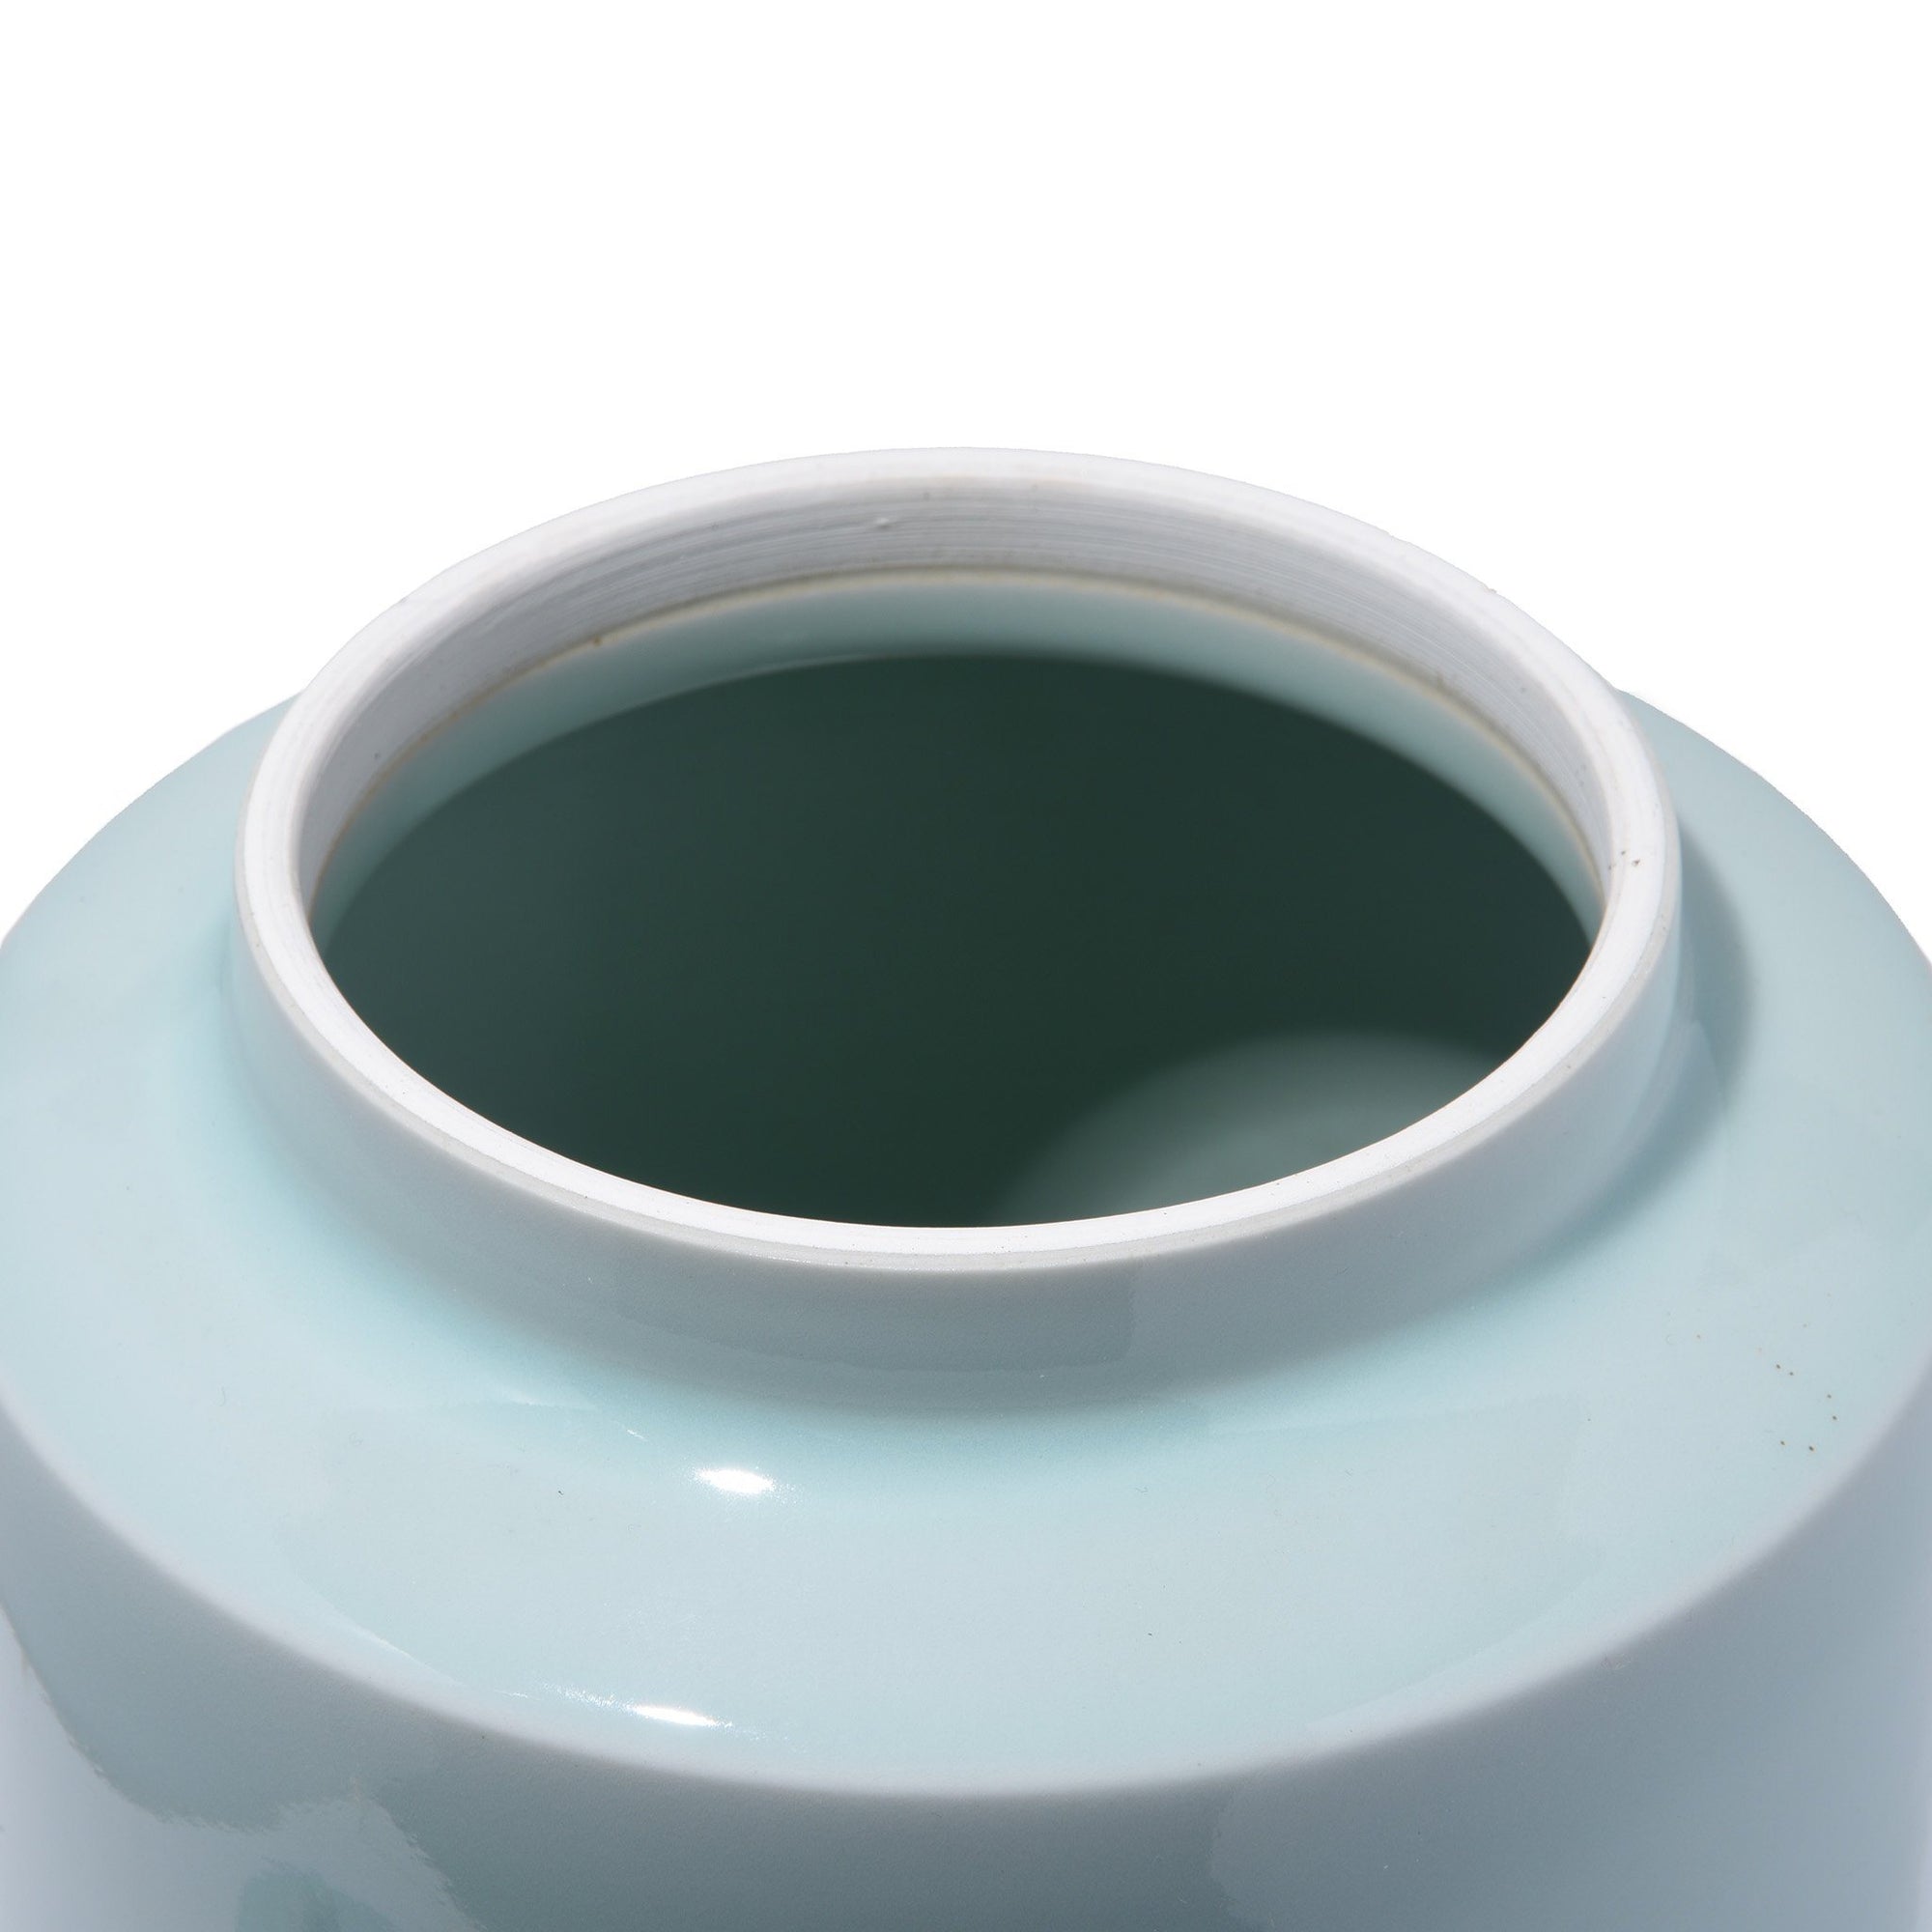 Reproduction Chinese Celadon Glaze Porcelain Tea Caddy | Indigo Antiques